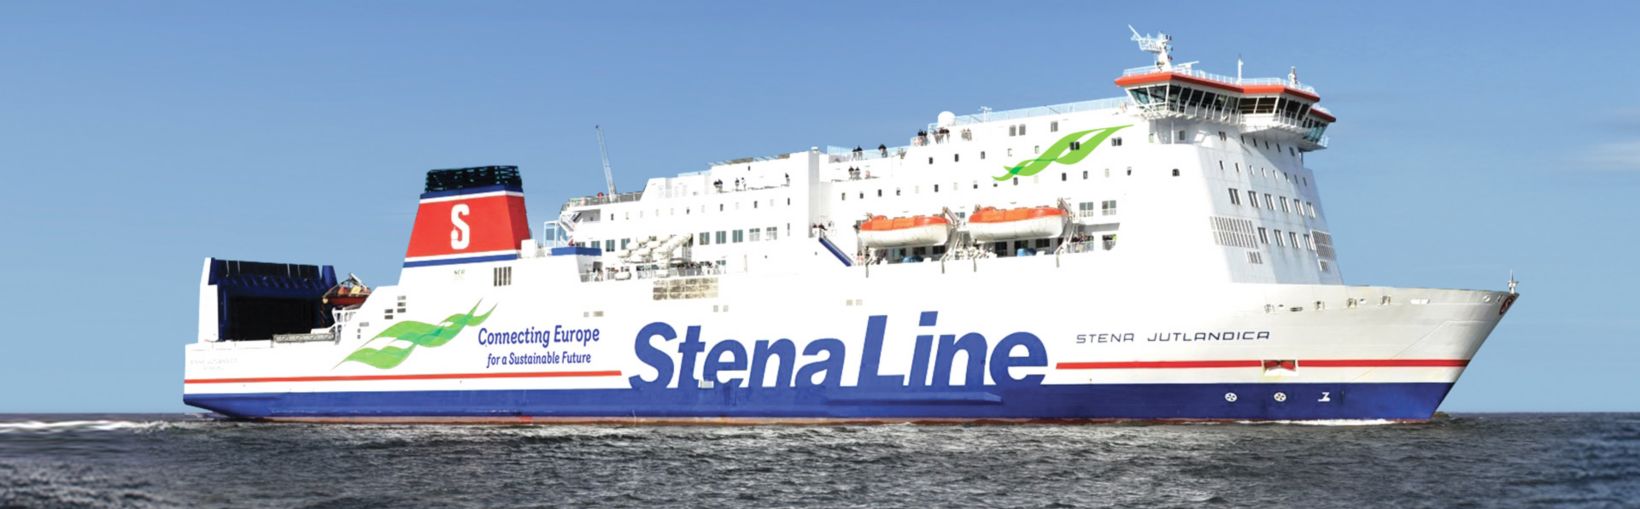 Stena Jutlandica Fähre auf See